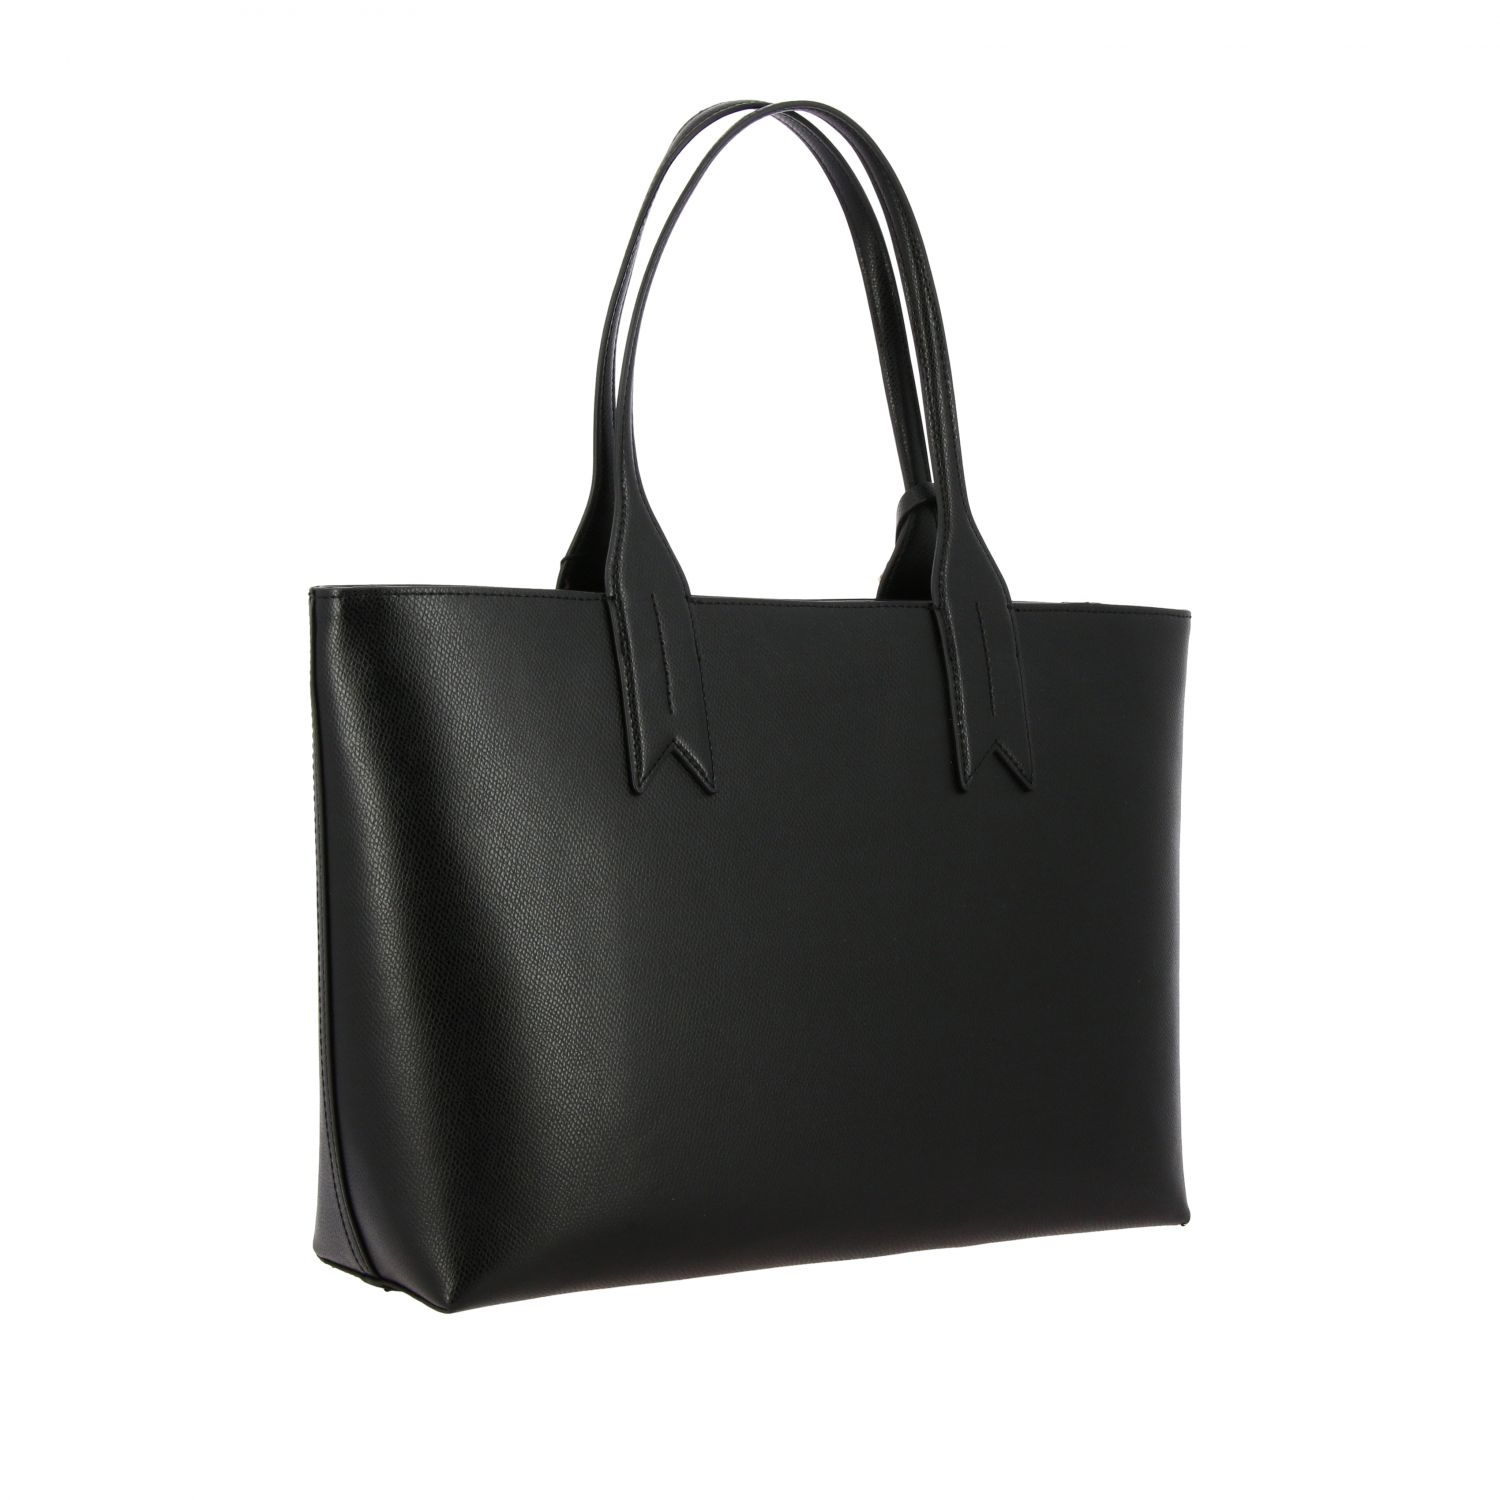 Emporio Armani Outlet: Shoulder bag women | Shoulder Bag Emporio Armani ...